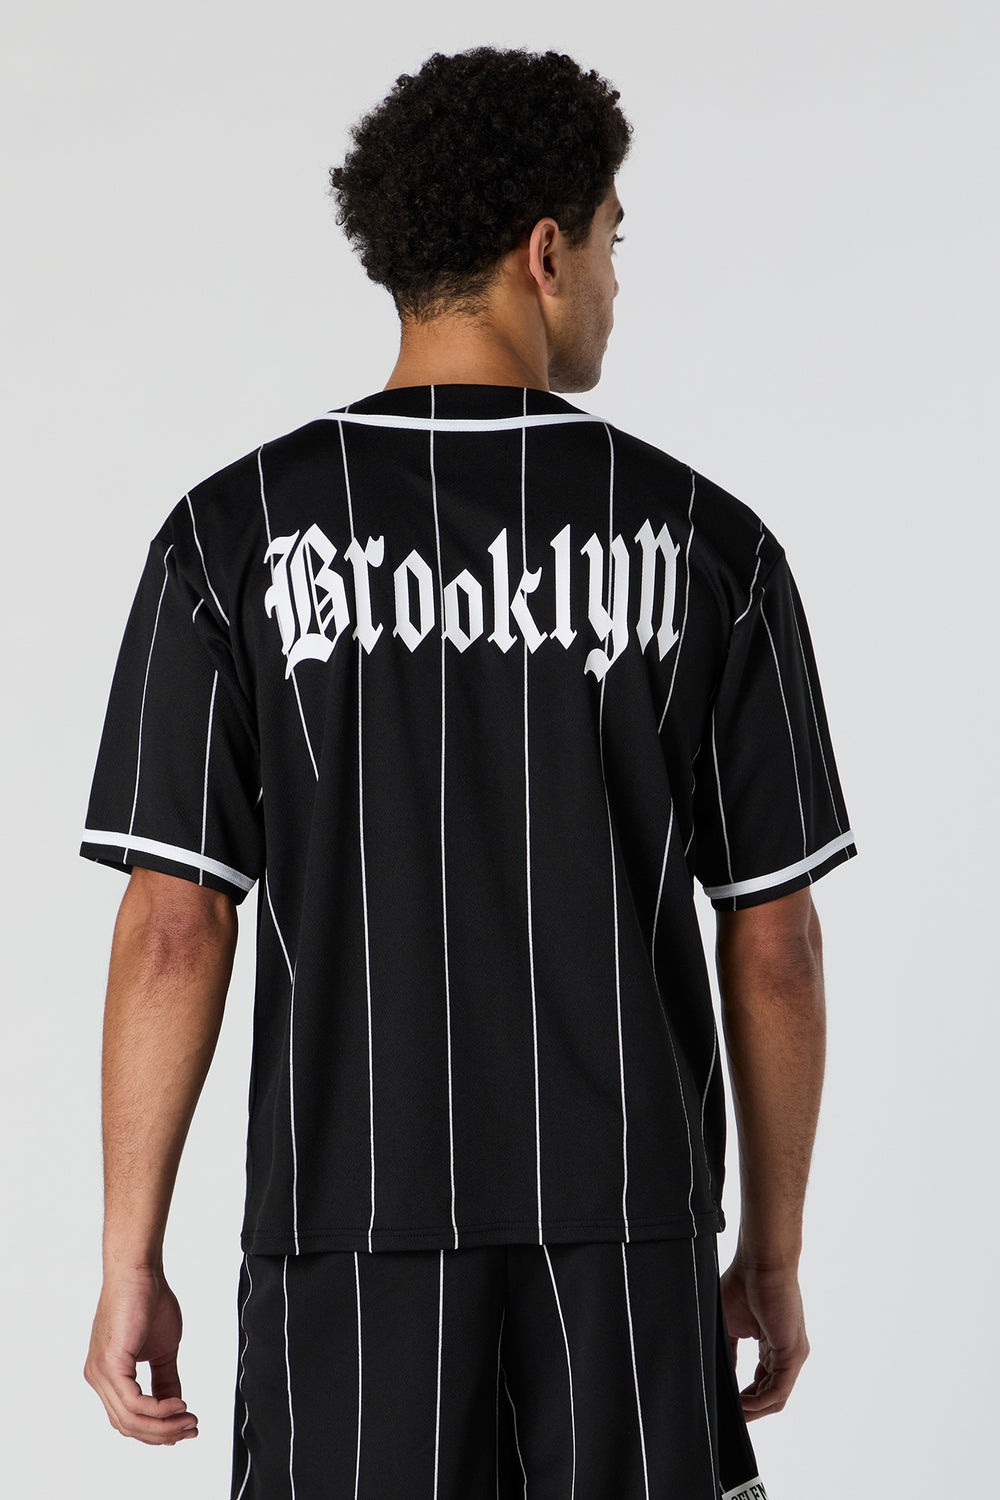 Brooklyn Graphic Baseball Jersey Brooklyn Graphic Baseball Jersey 2